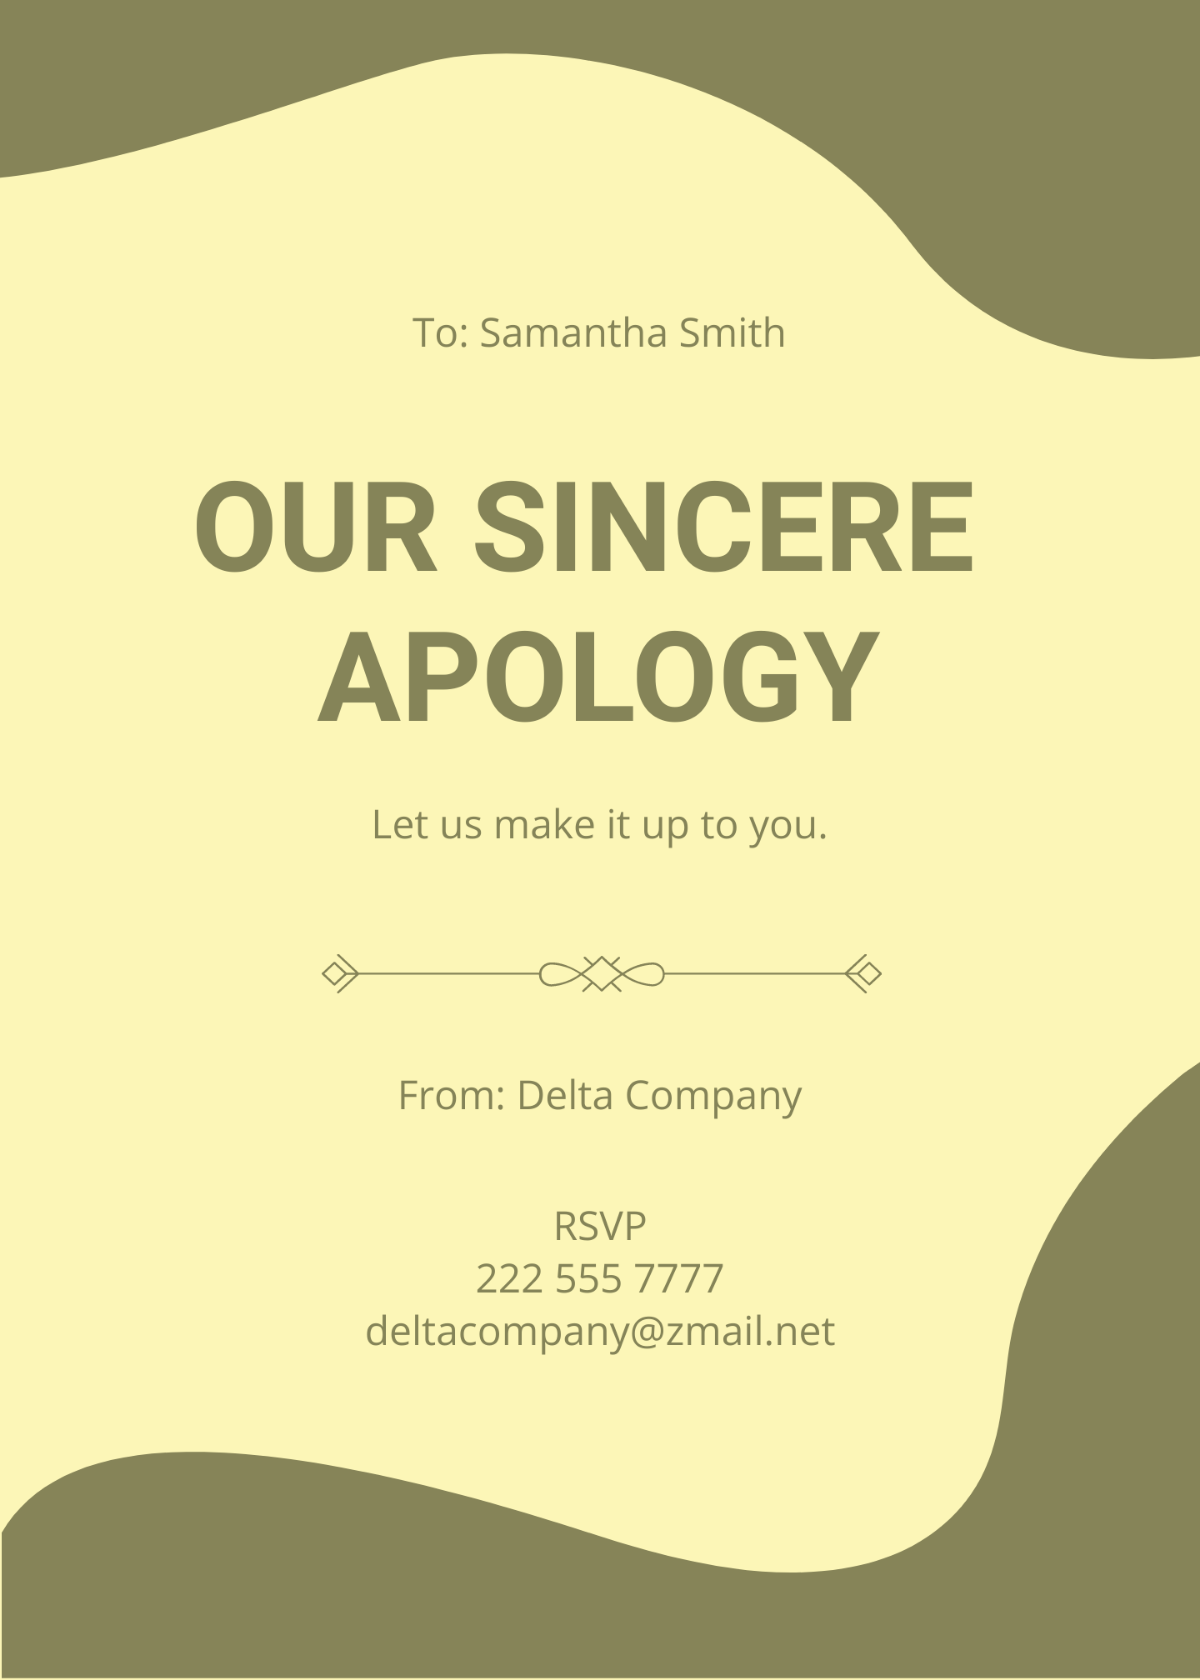 Customer Apology Card Template